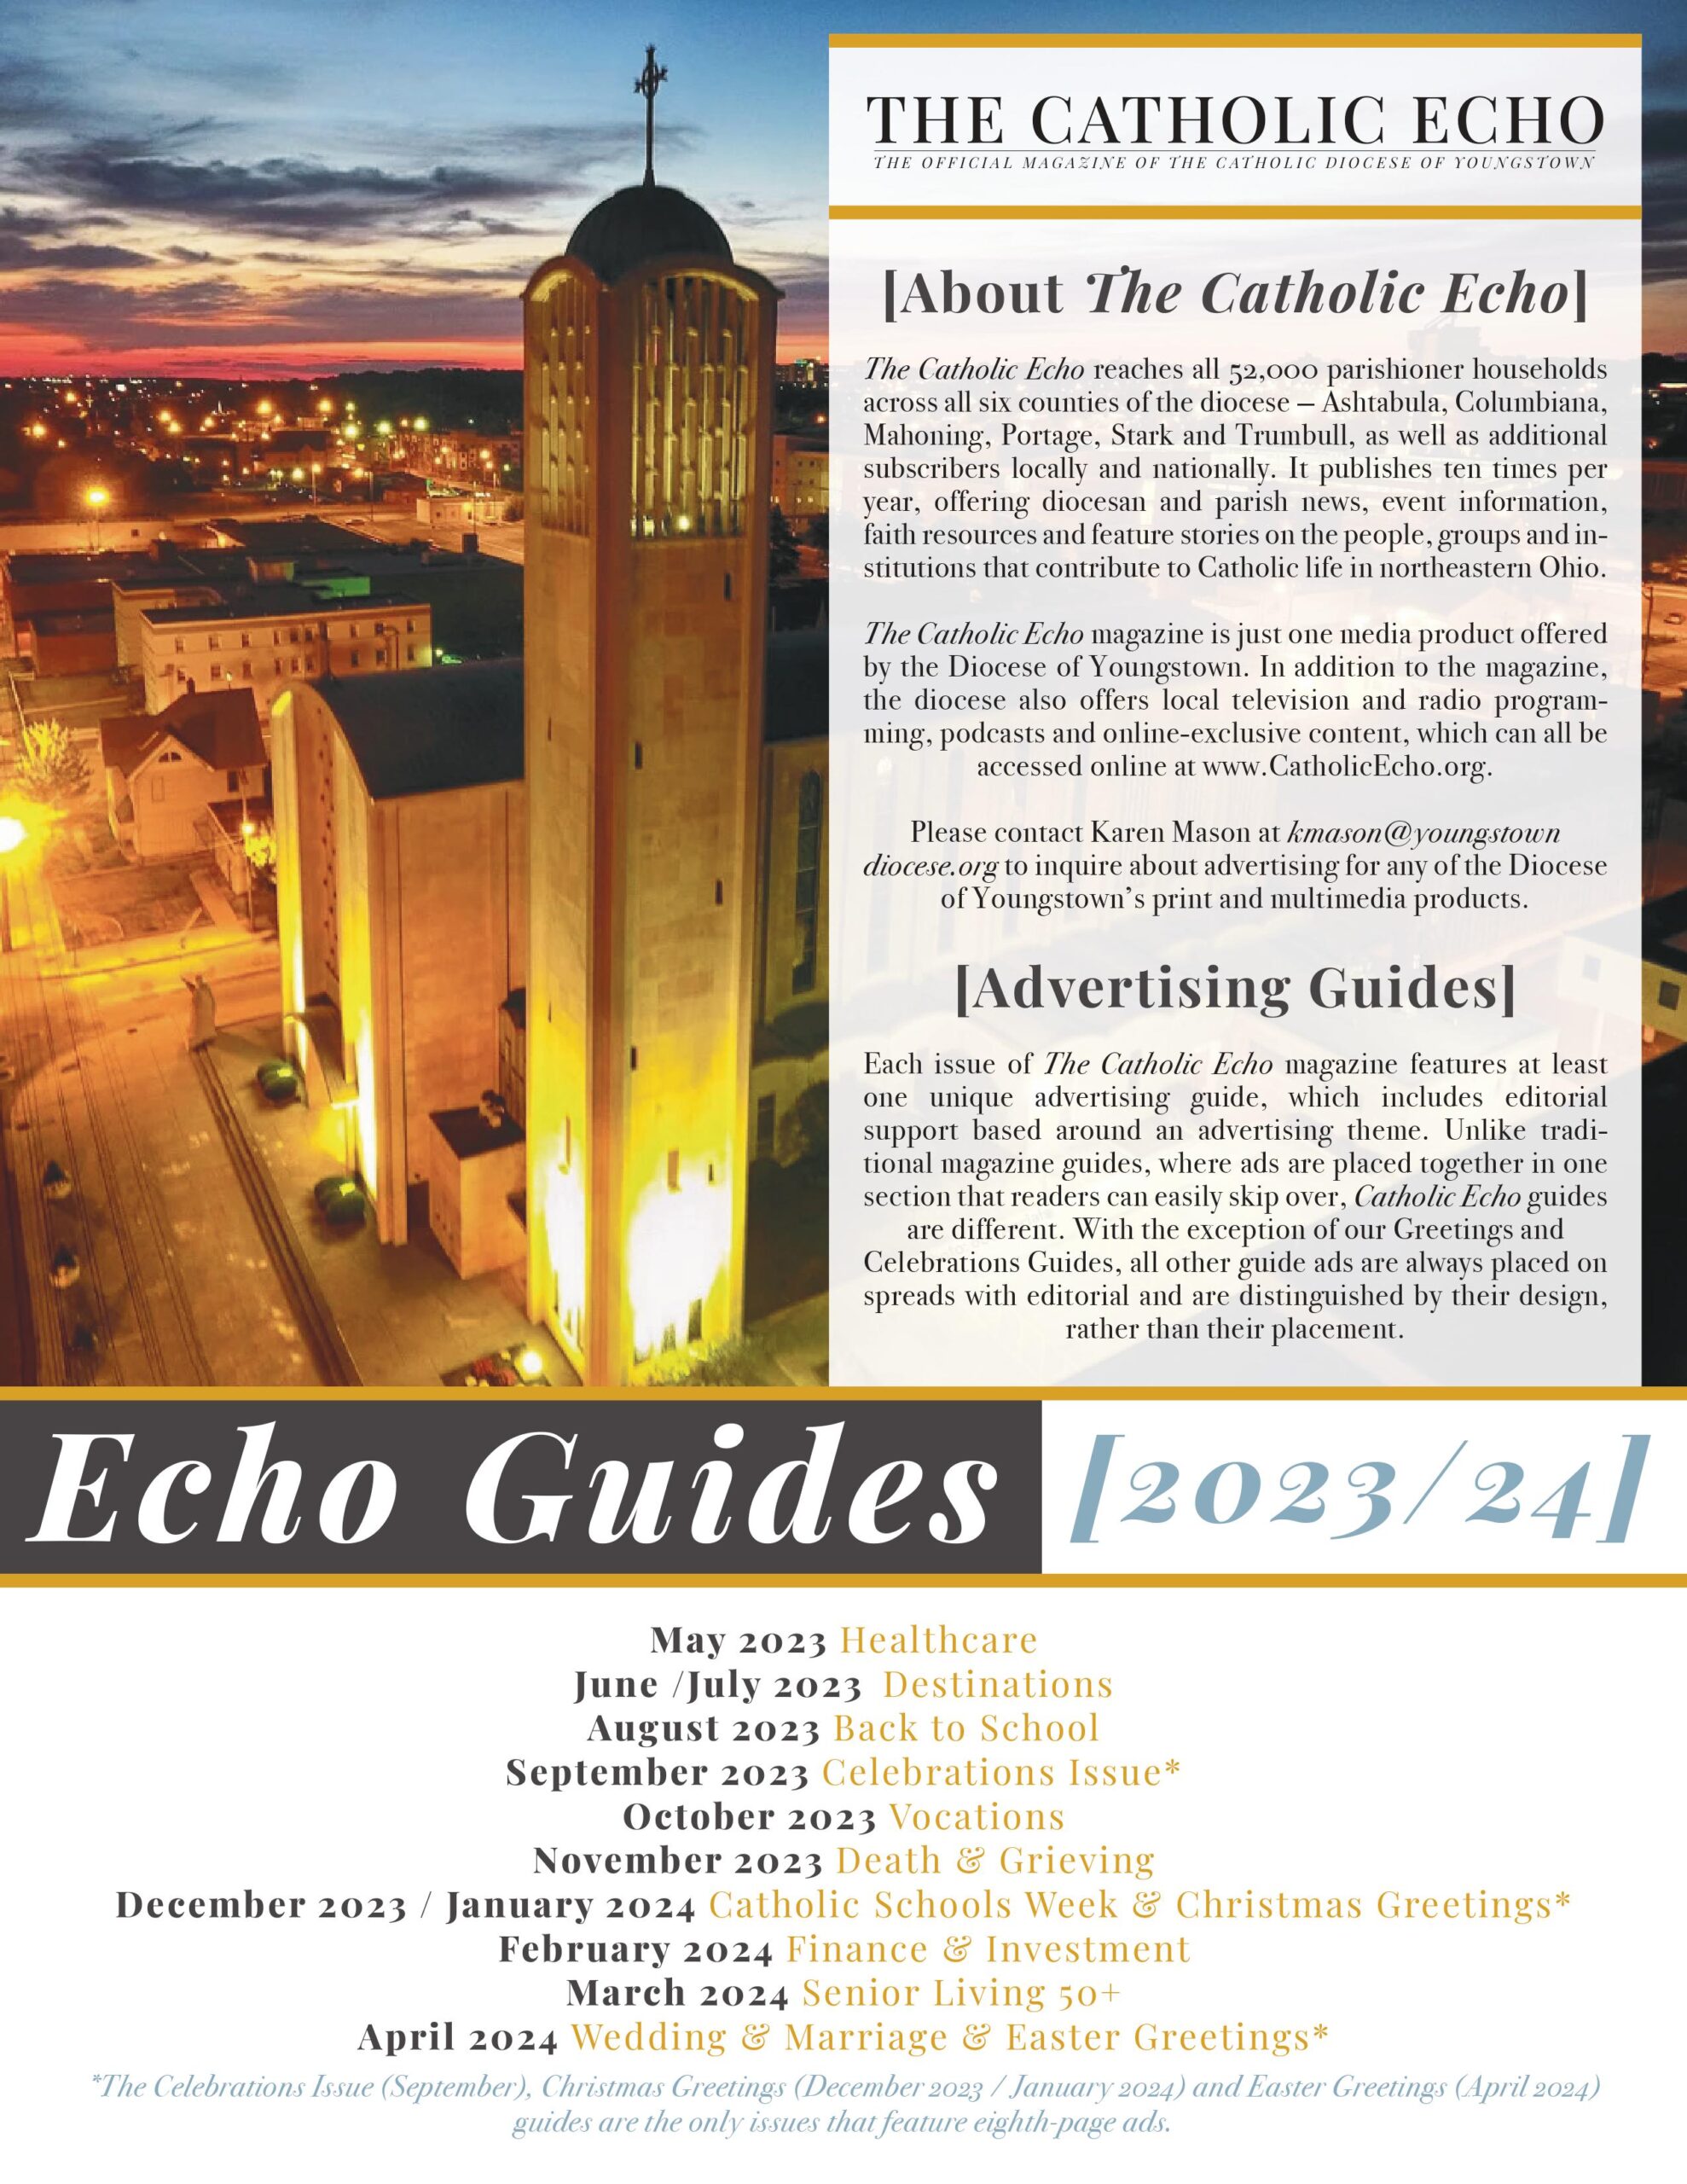 Echo Guides 2023/24
Contact Karen Mason at kmason@youngstowndiocese.org